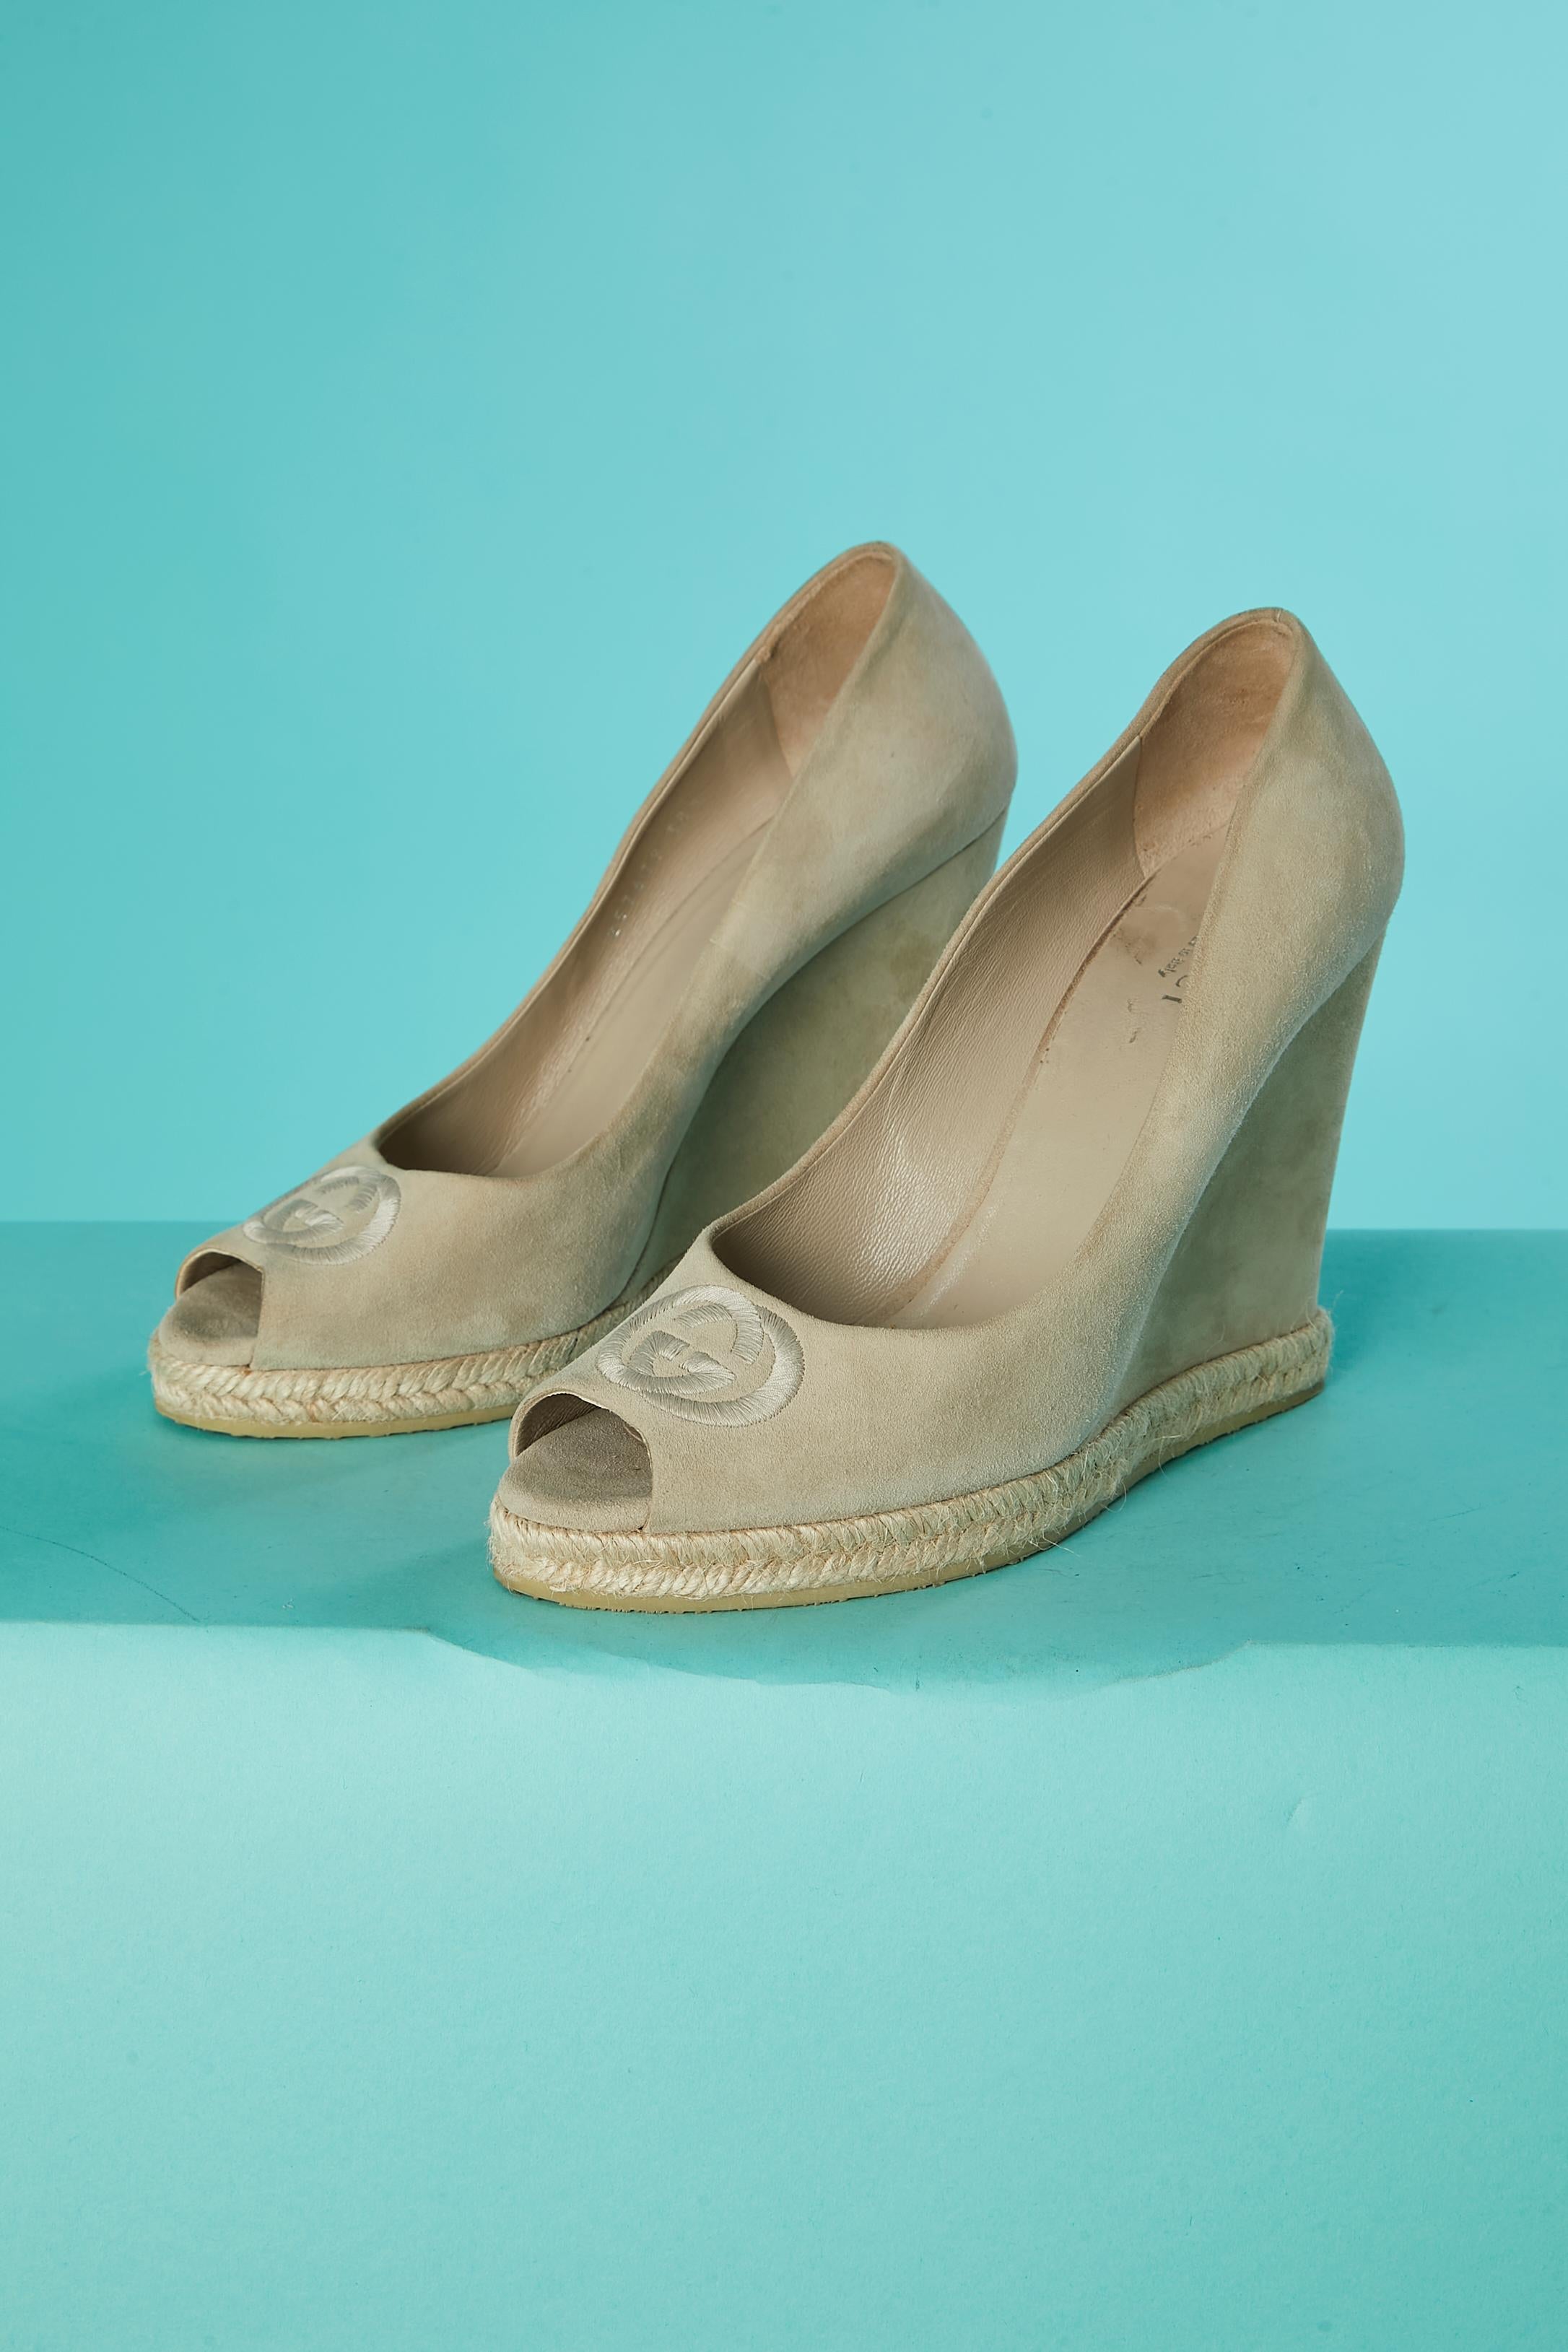 Branded wedge heel open-toe shoes in beige suede and cord sole.
Heel's height : 11 cm
Plateform height : 2 cm
SHOE SIZE : 38,5 (EU) 7 (US) 
